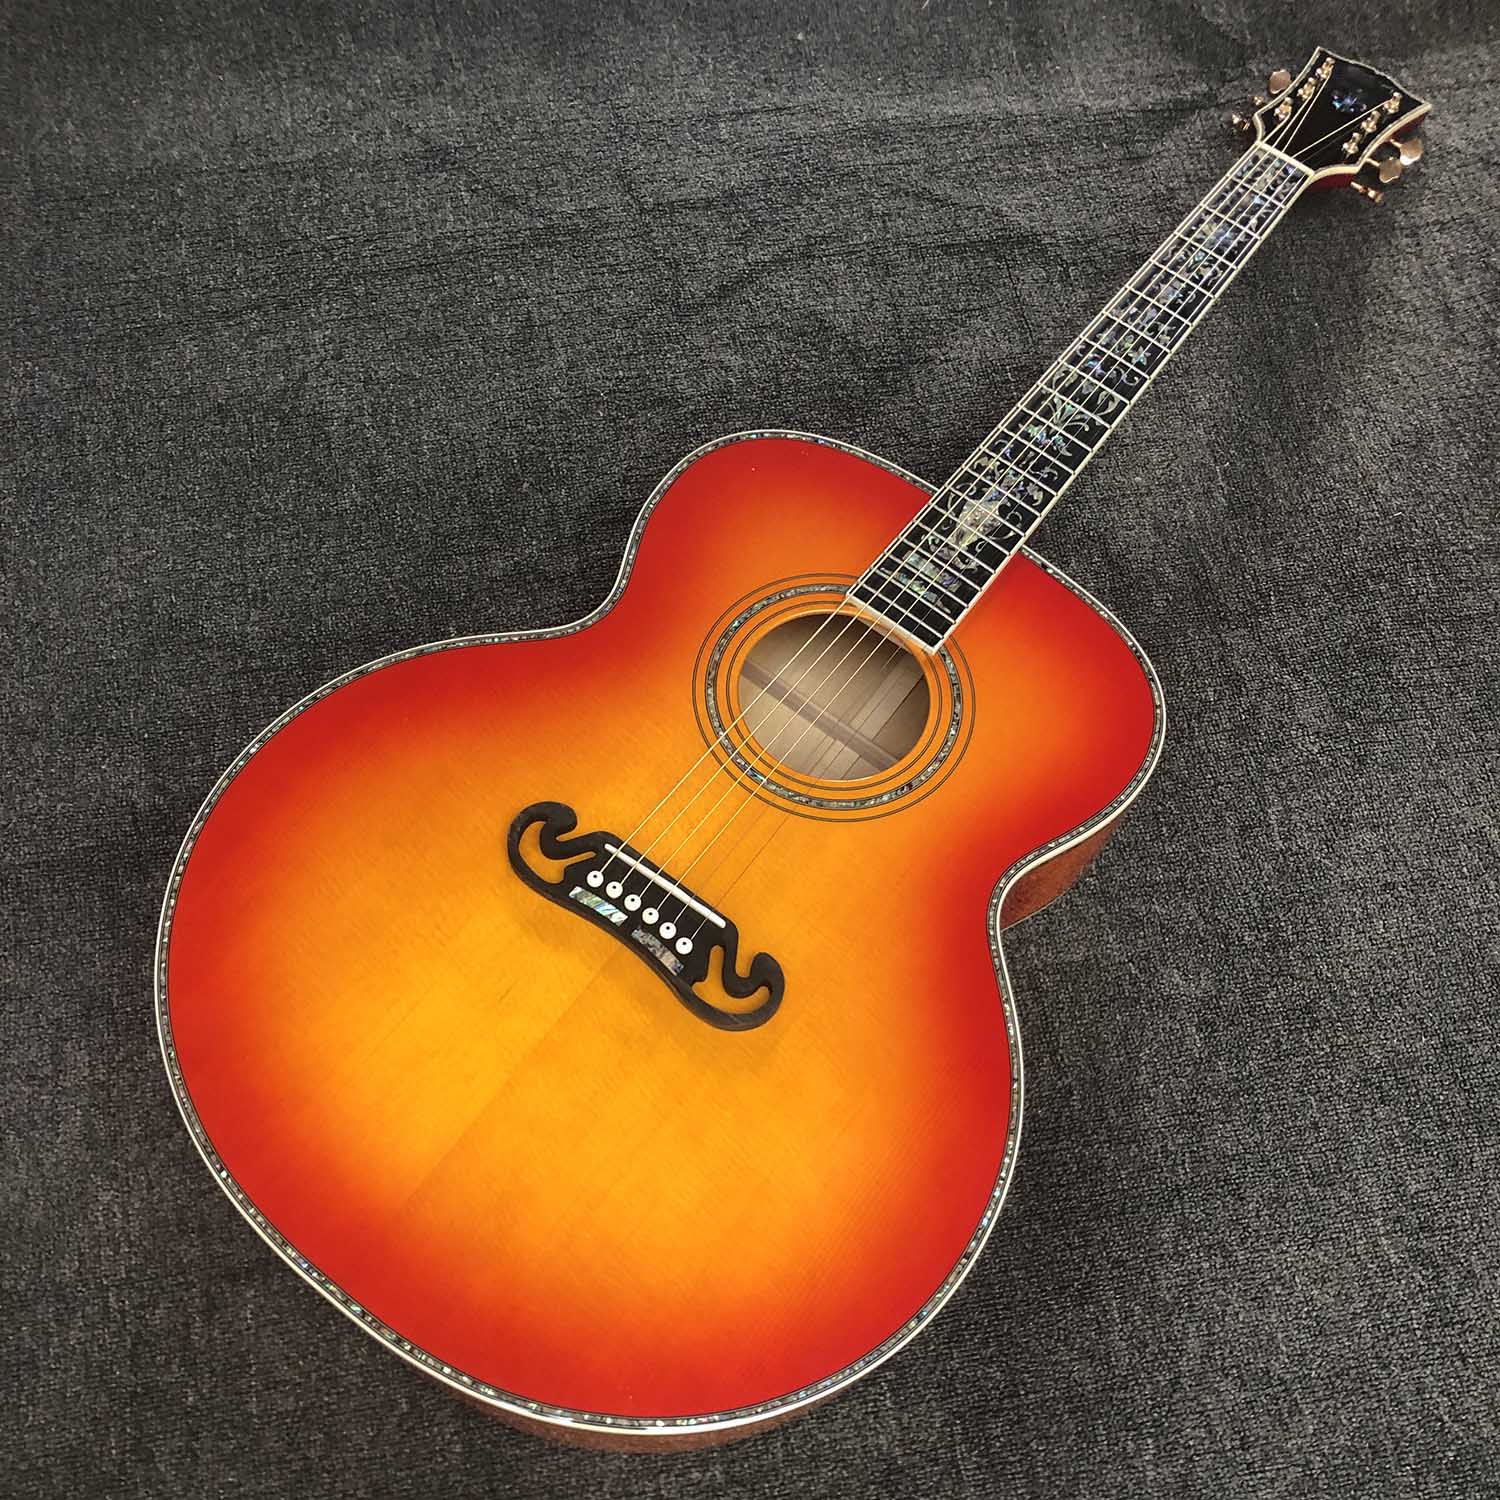 Guitarra acústico Jumbo J200 personalizado com abalone Body Spruce Jumbo Body J200VS Ripple Maple Back lateral em estoque